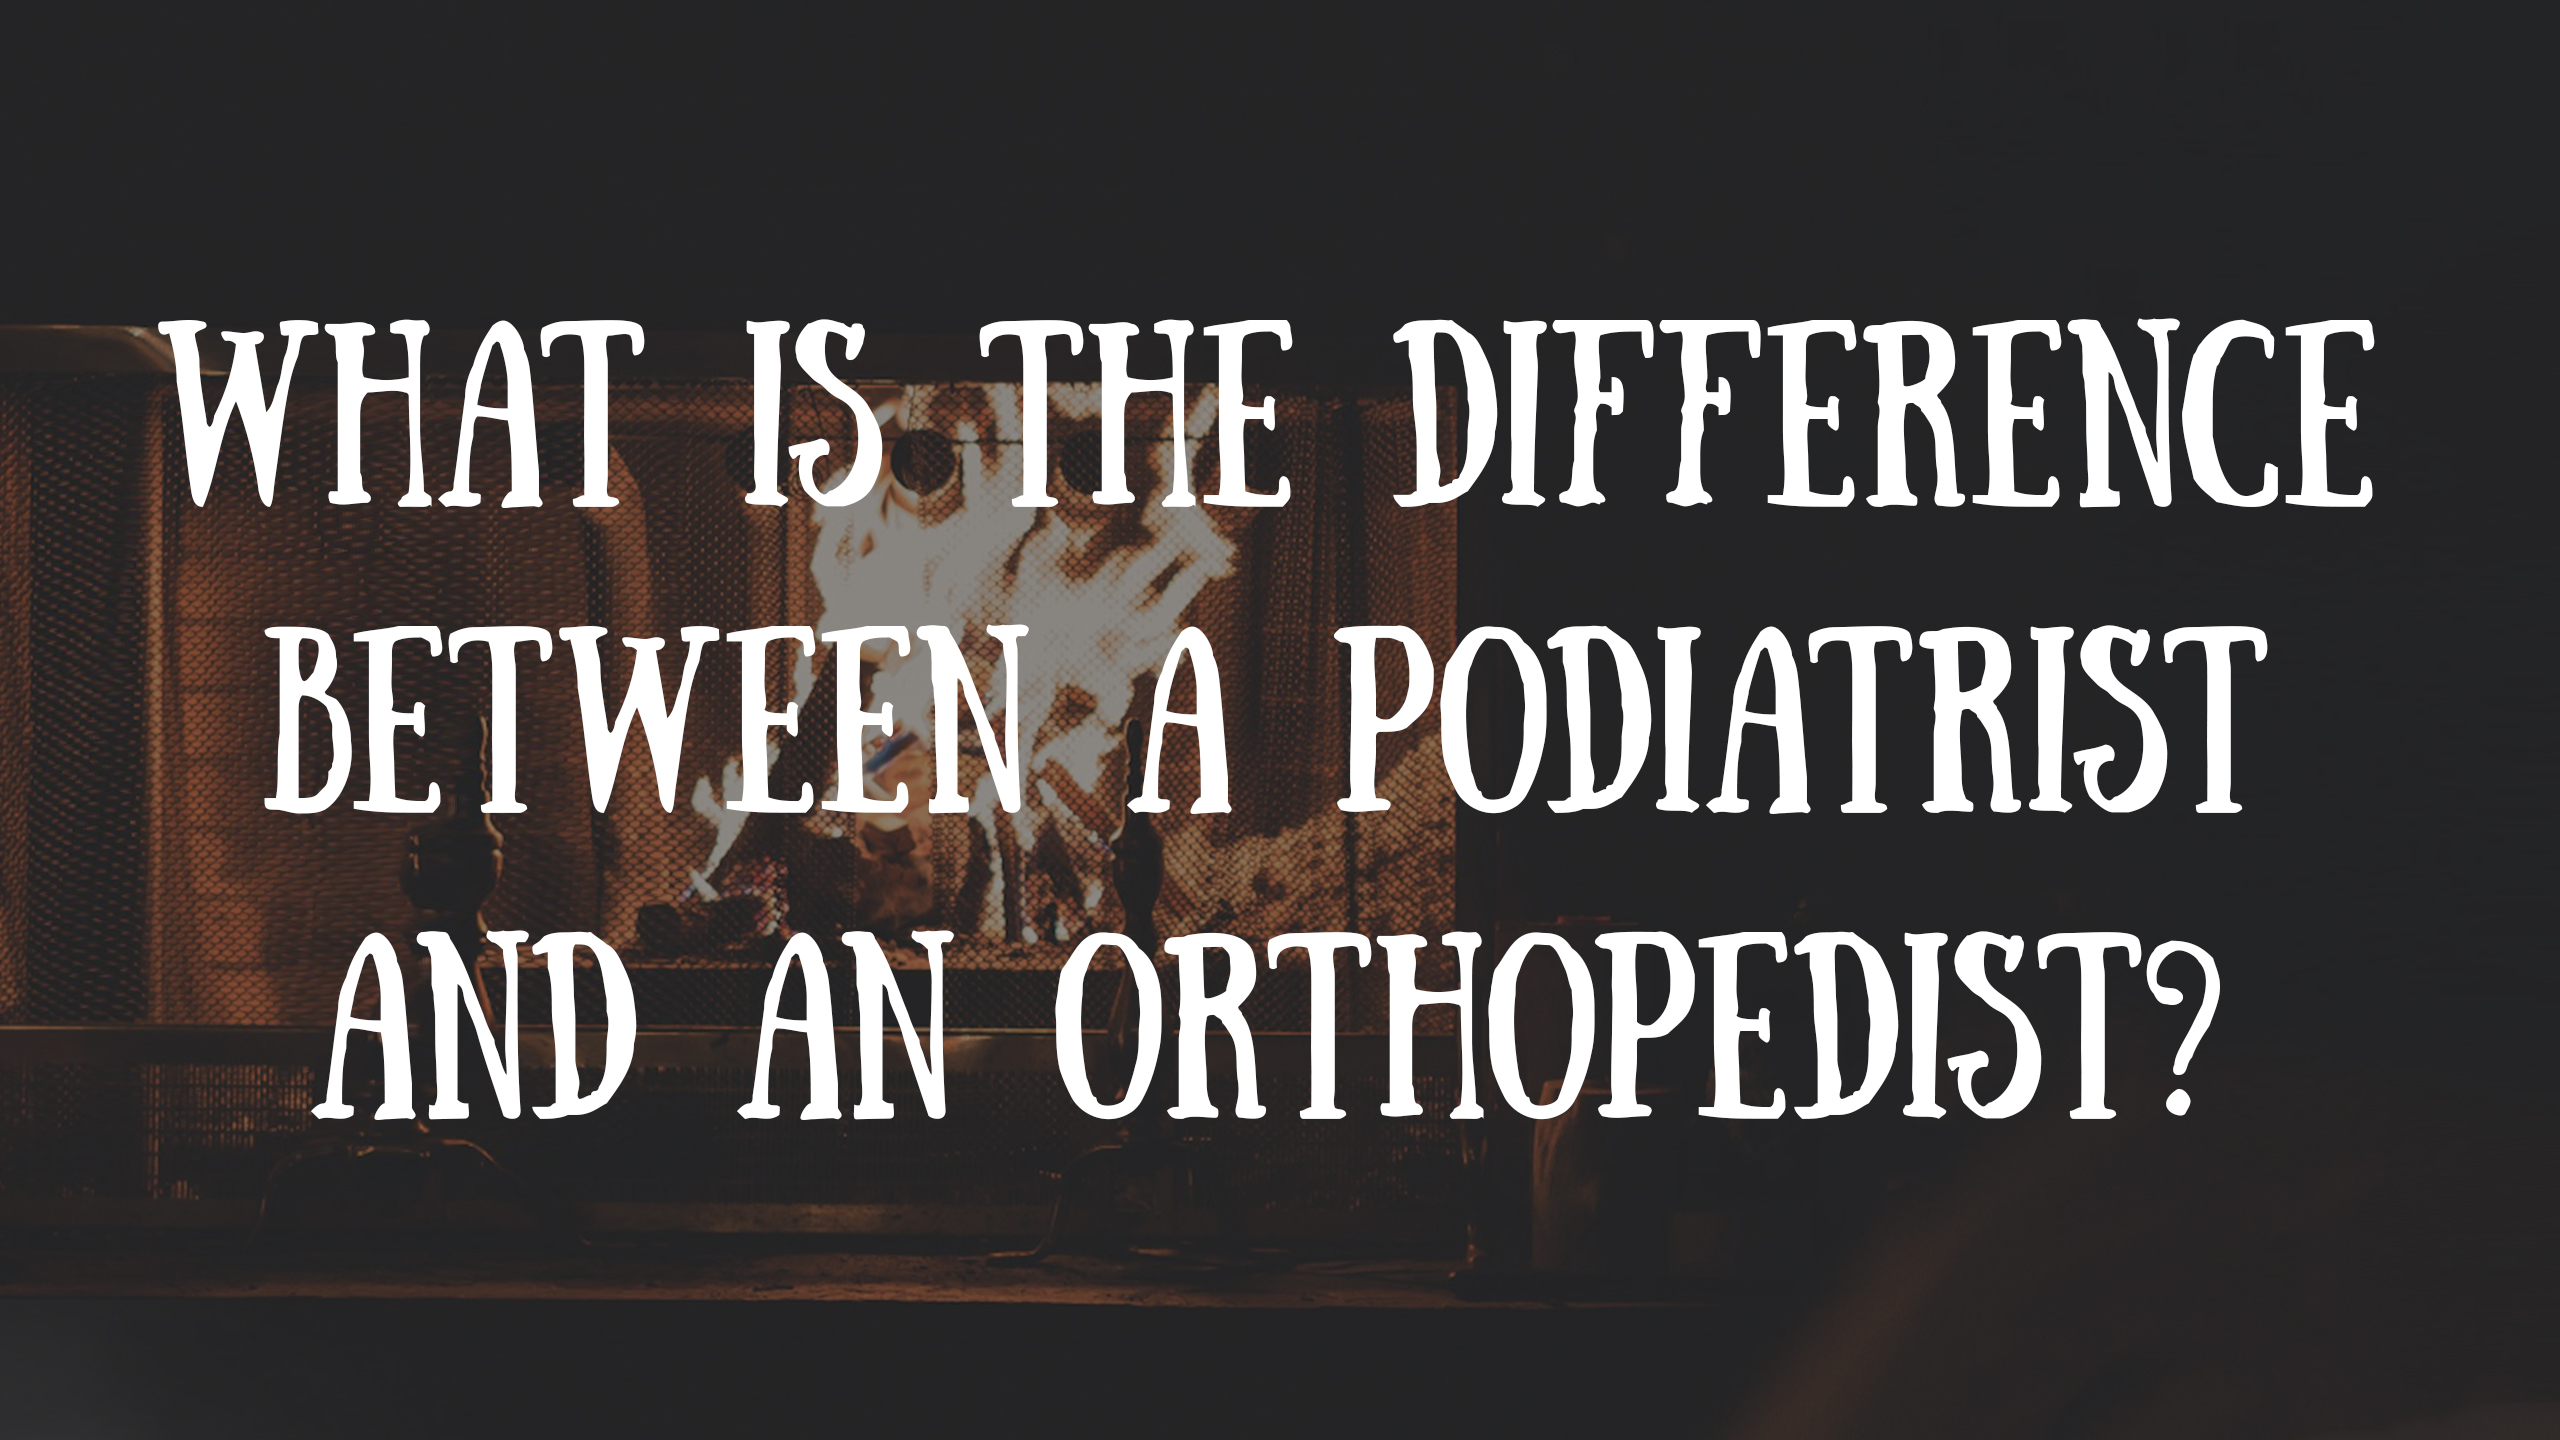 podiatry school, dpm, podiatrist, podiatry, medical school, podiatrist vs orthopedist